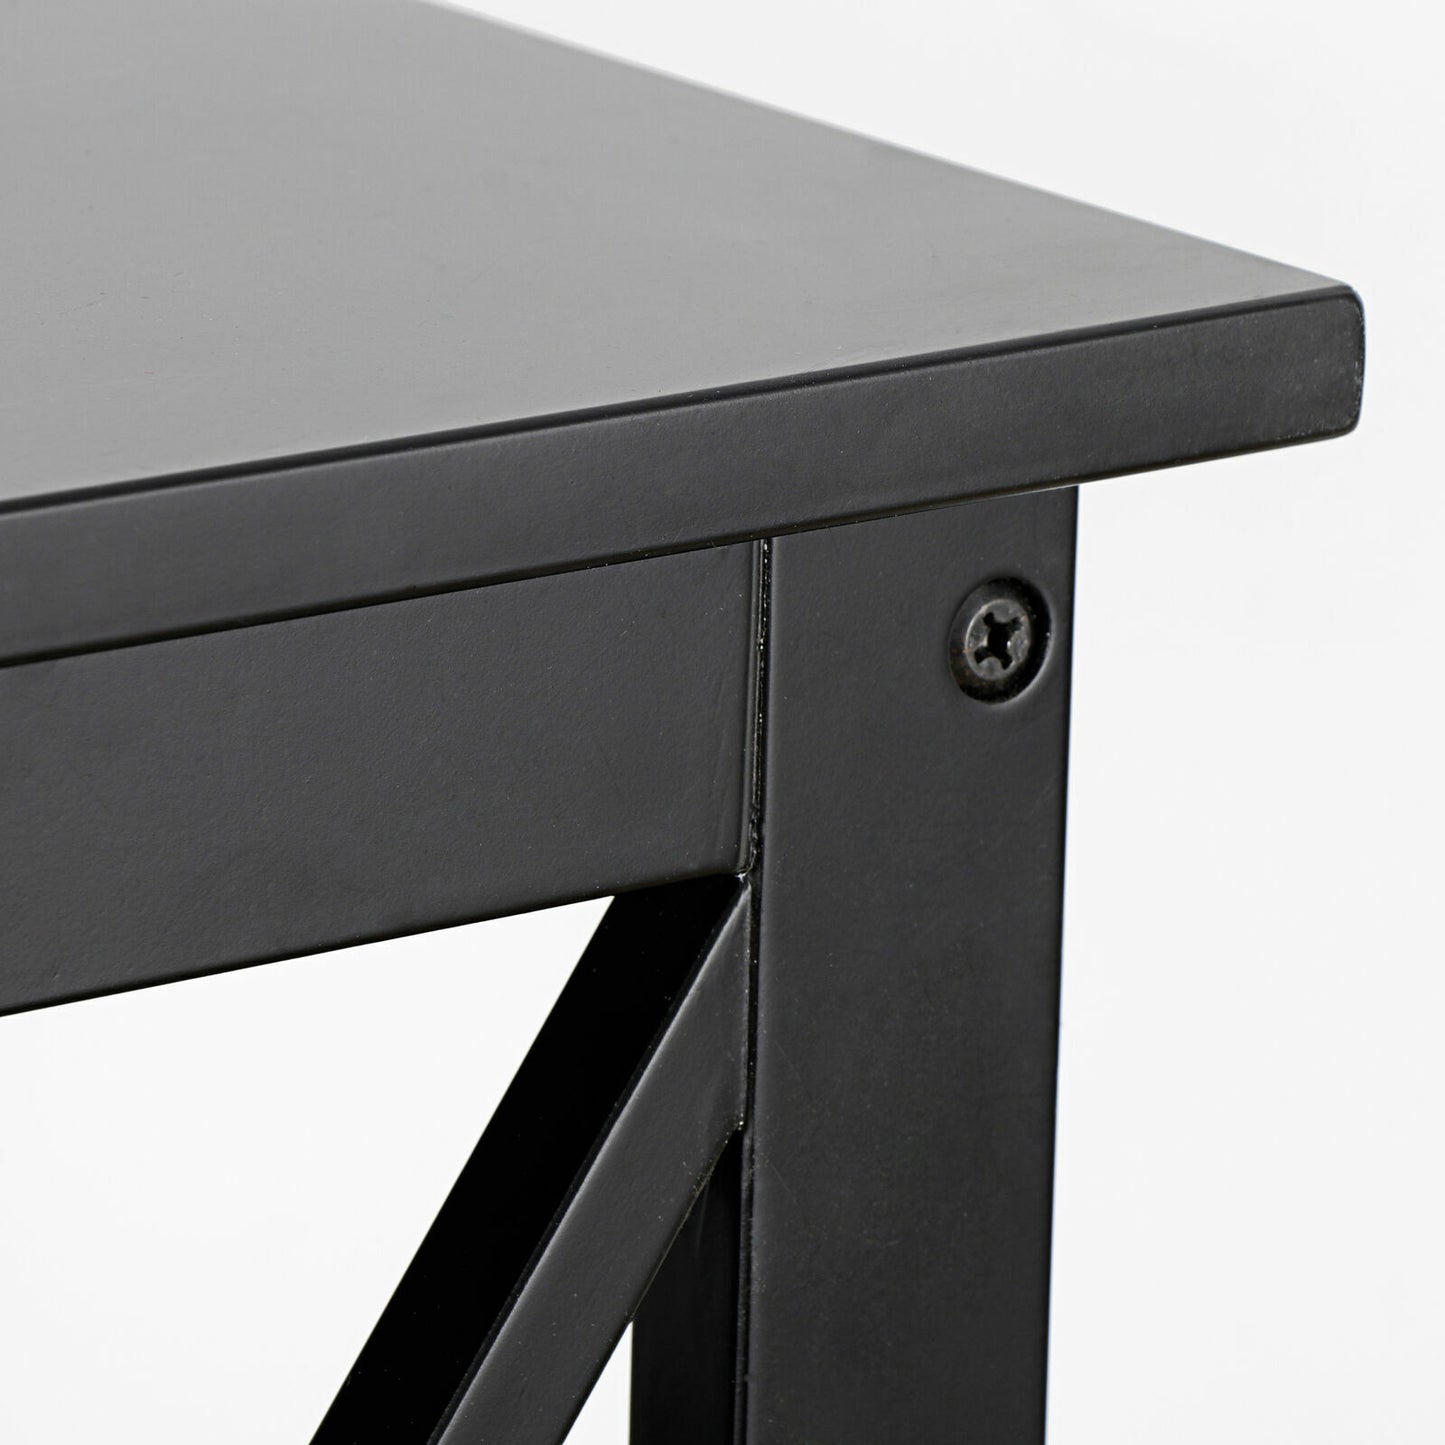 2PCS End Table with Storage Shelves Versatile X-Design Sofa Side Table Furniture